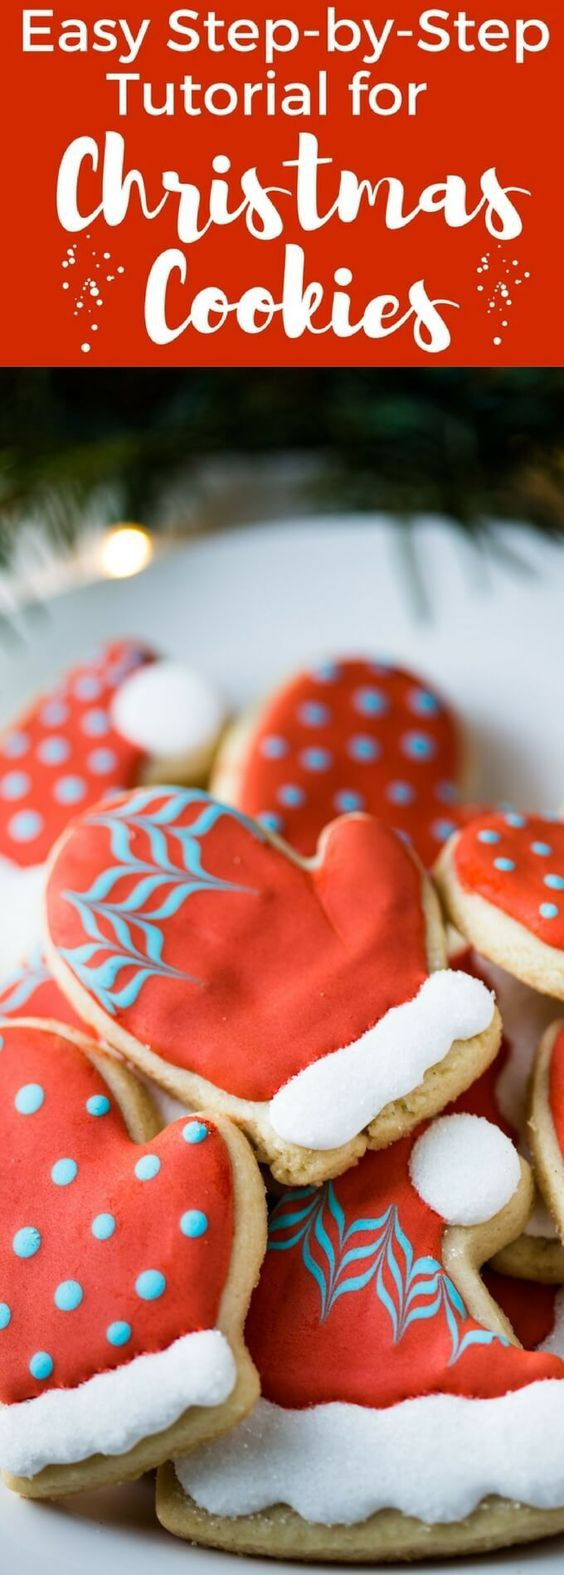 Easy Christmas Cookies Pinterest
 Pinterest • The world’s catalog of ideas